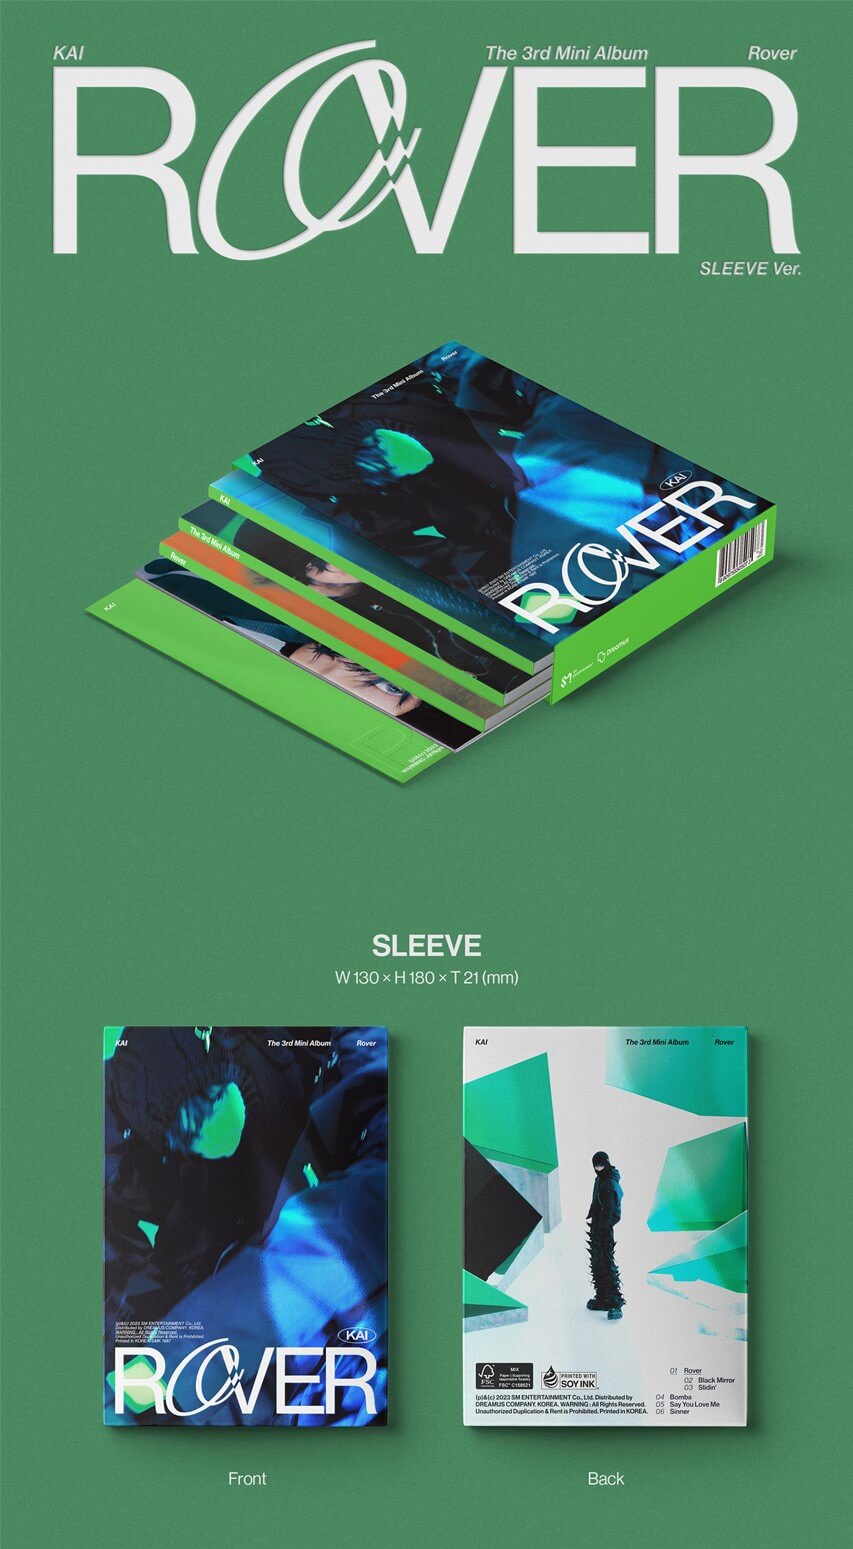 Kai 3rd Mini Album Rover - Sleeve Version Inclusions Sleeve